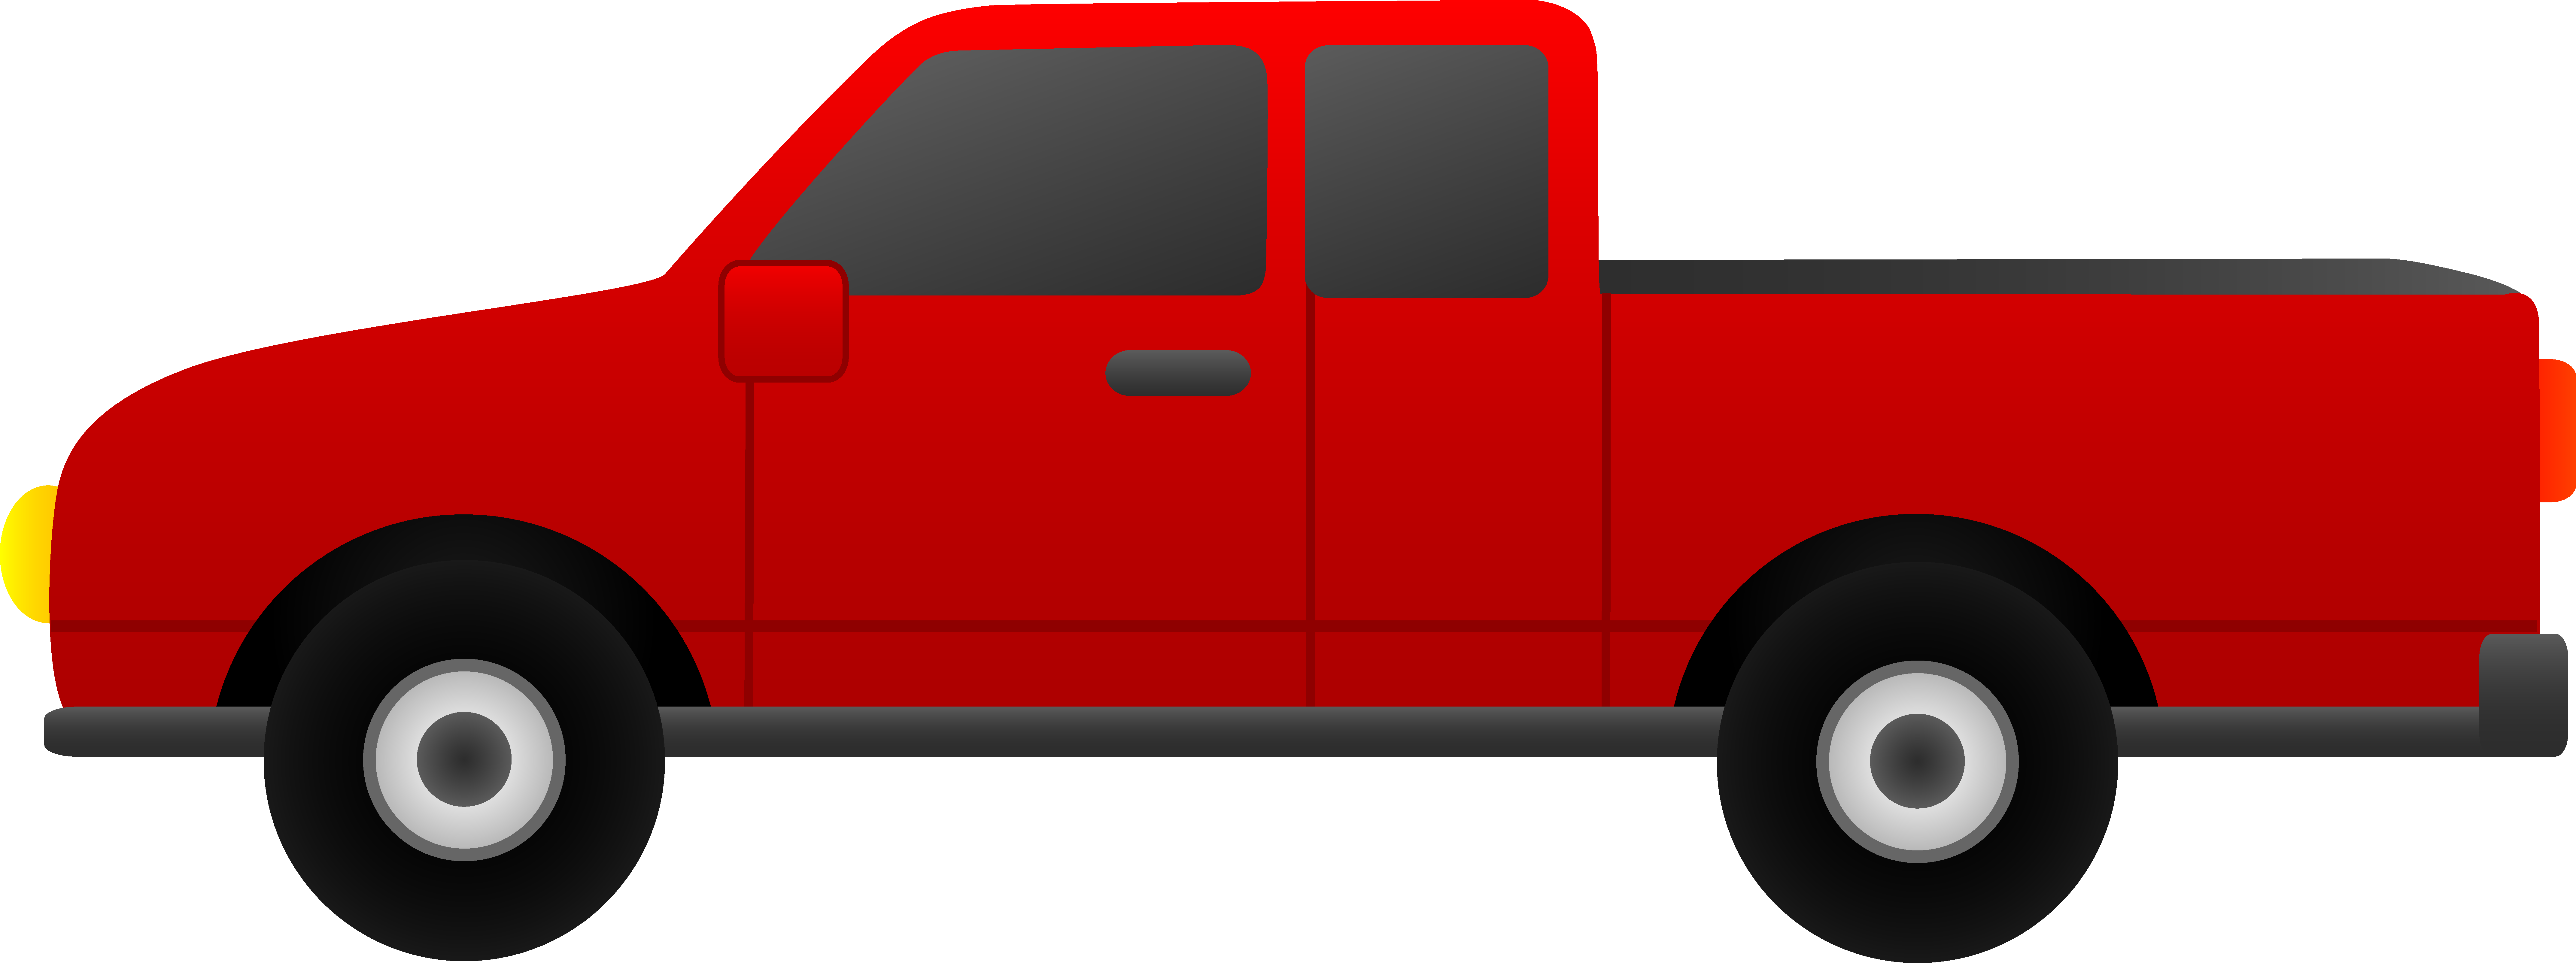 Red Pickup Truck Clip Art - Free Clip Art